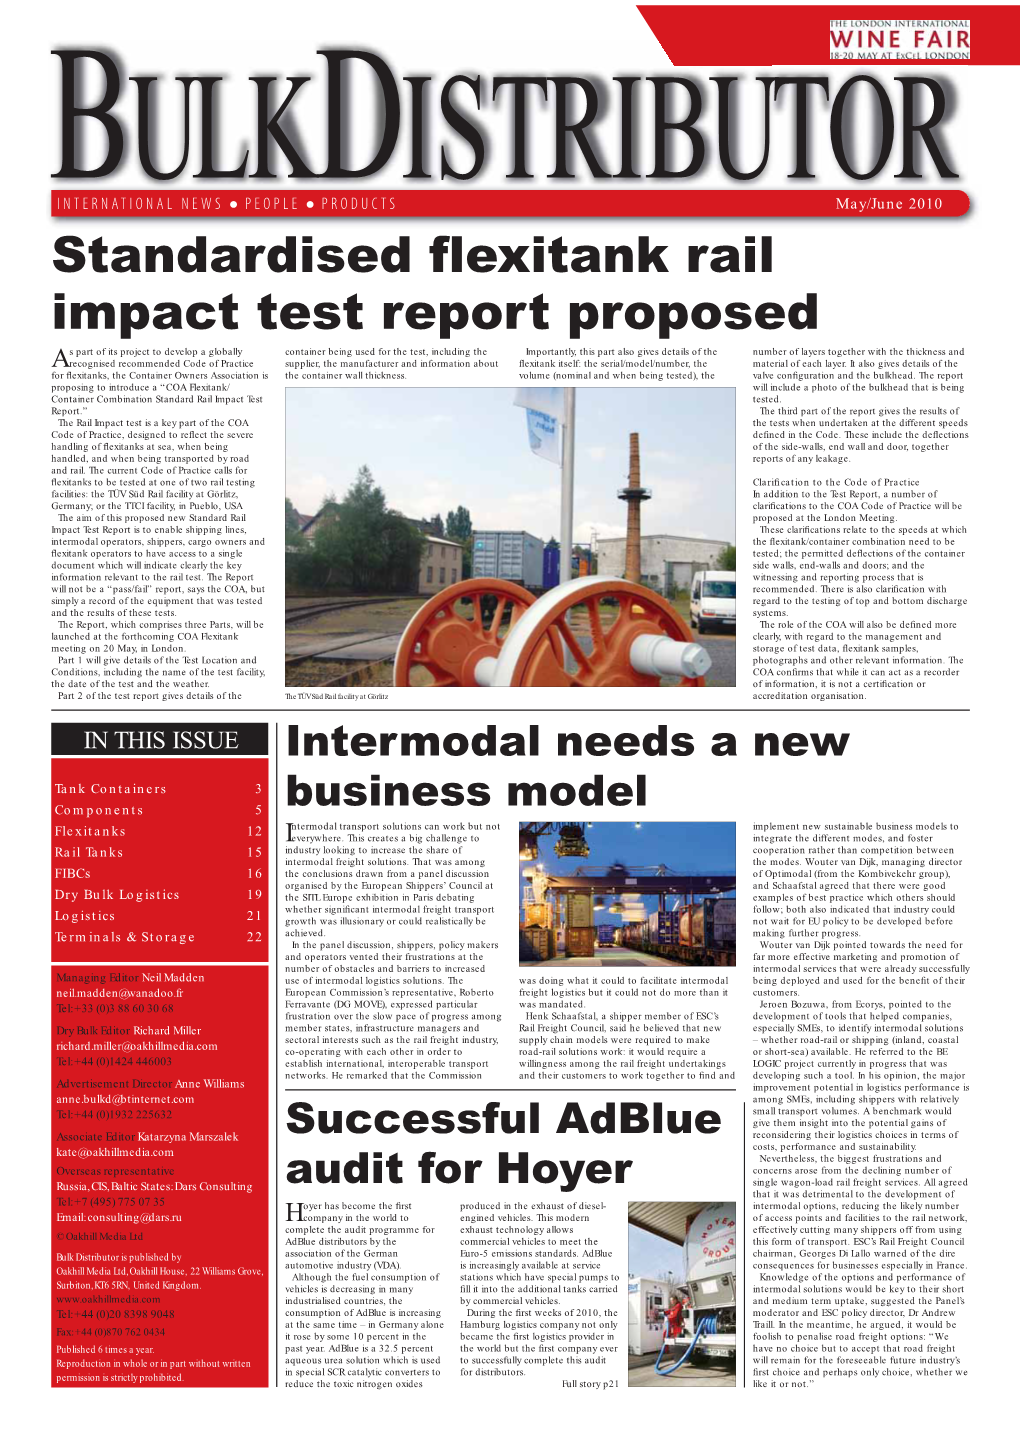 Standardised Flexitank Rail Impact Test Report Proposed